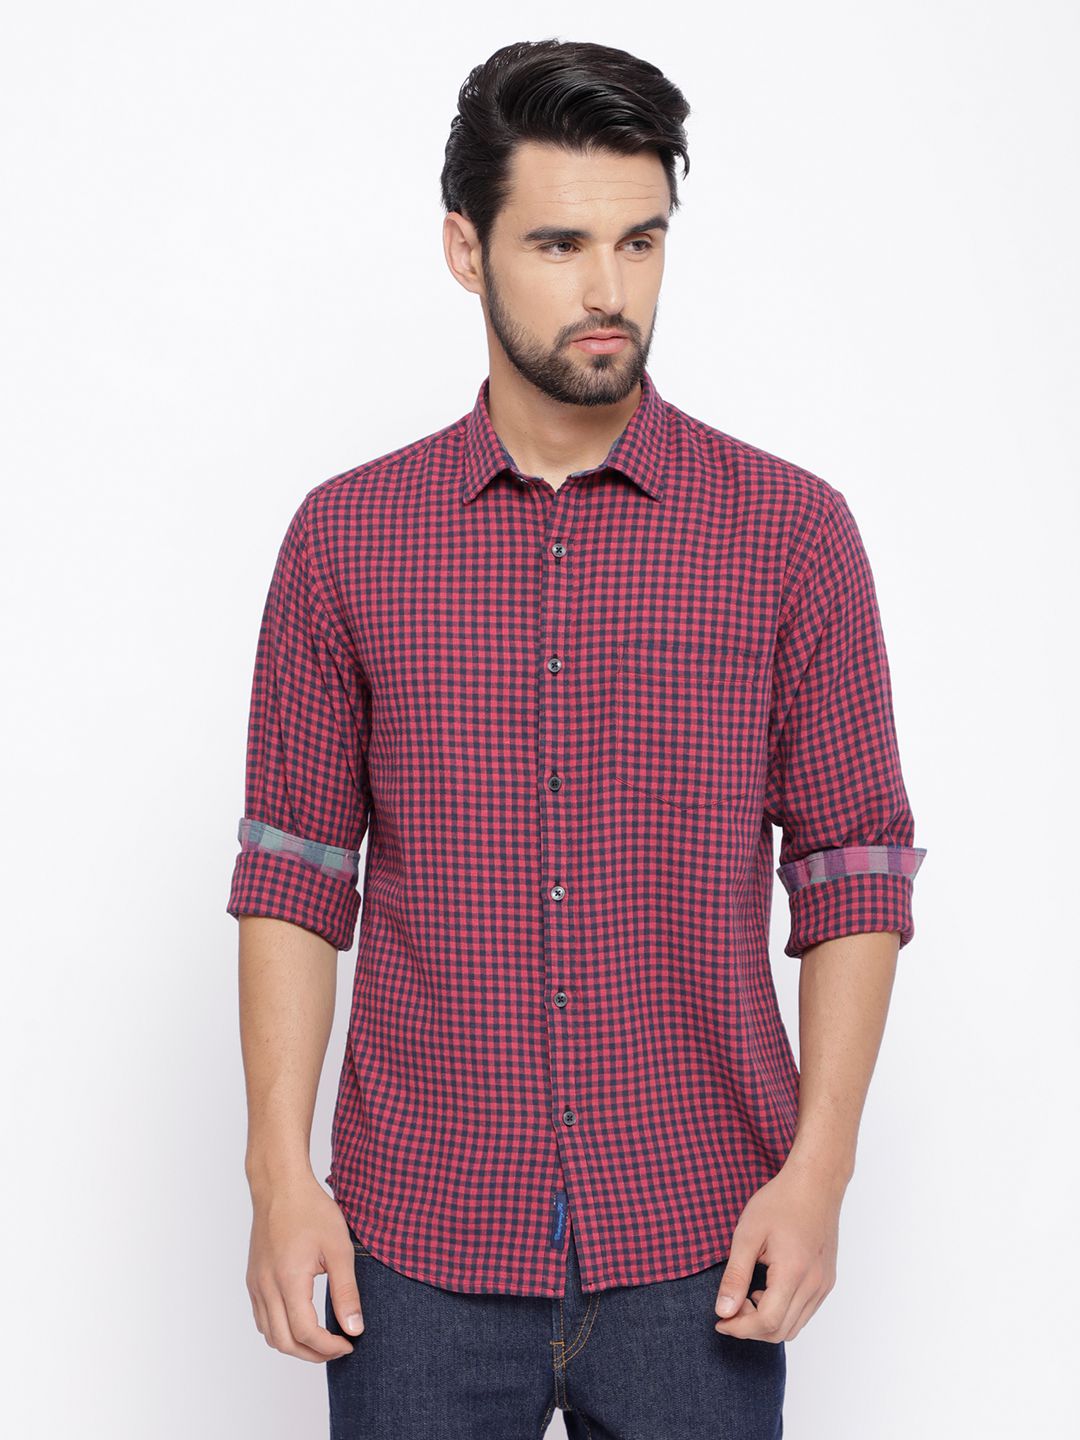 CAVALLO by Linen club Linen Shirt - Buy CAVALLO by Linen club Linen ...